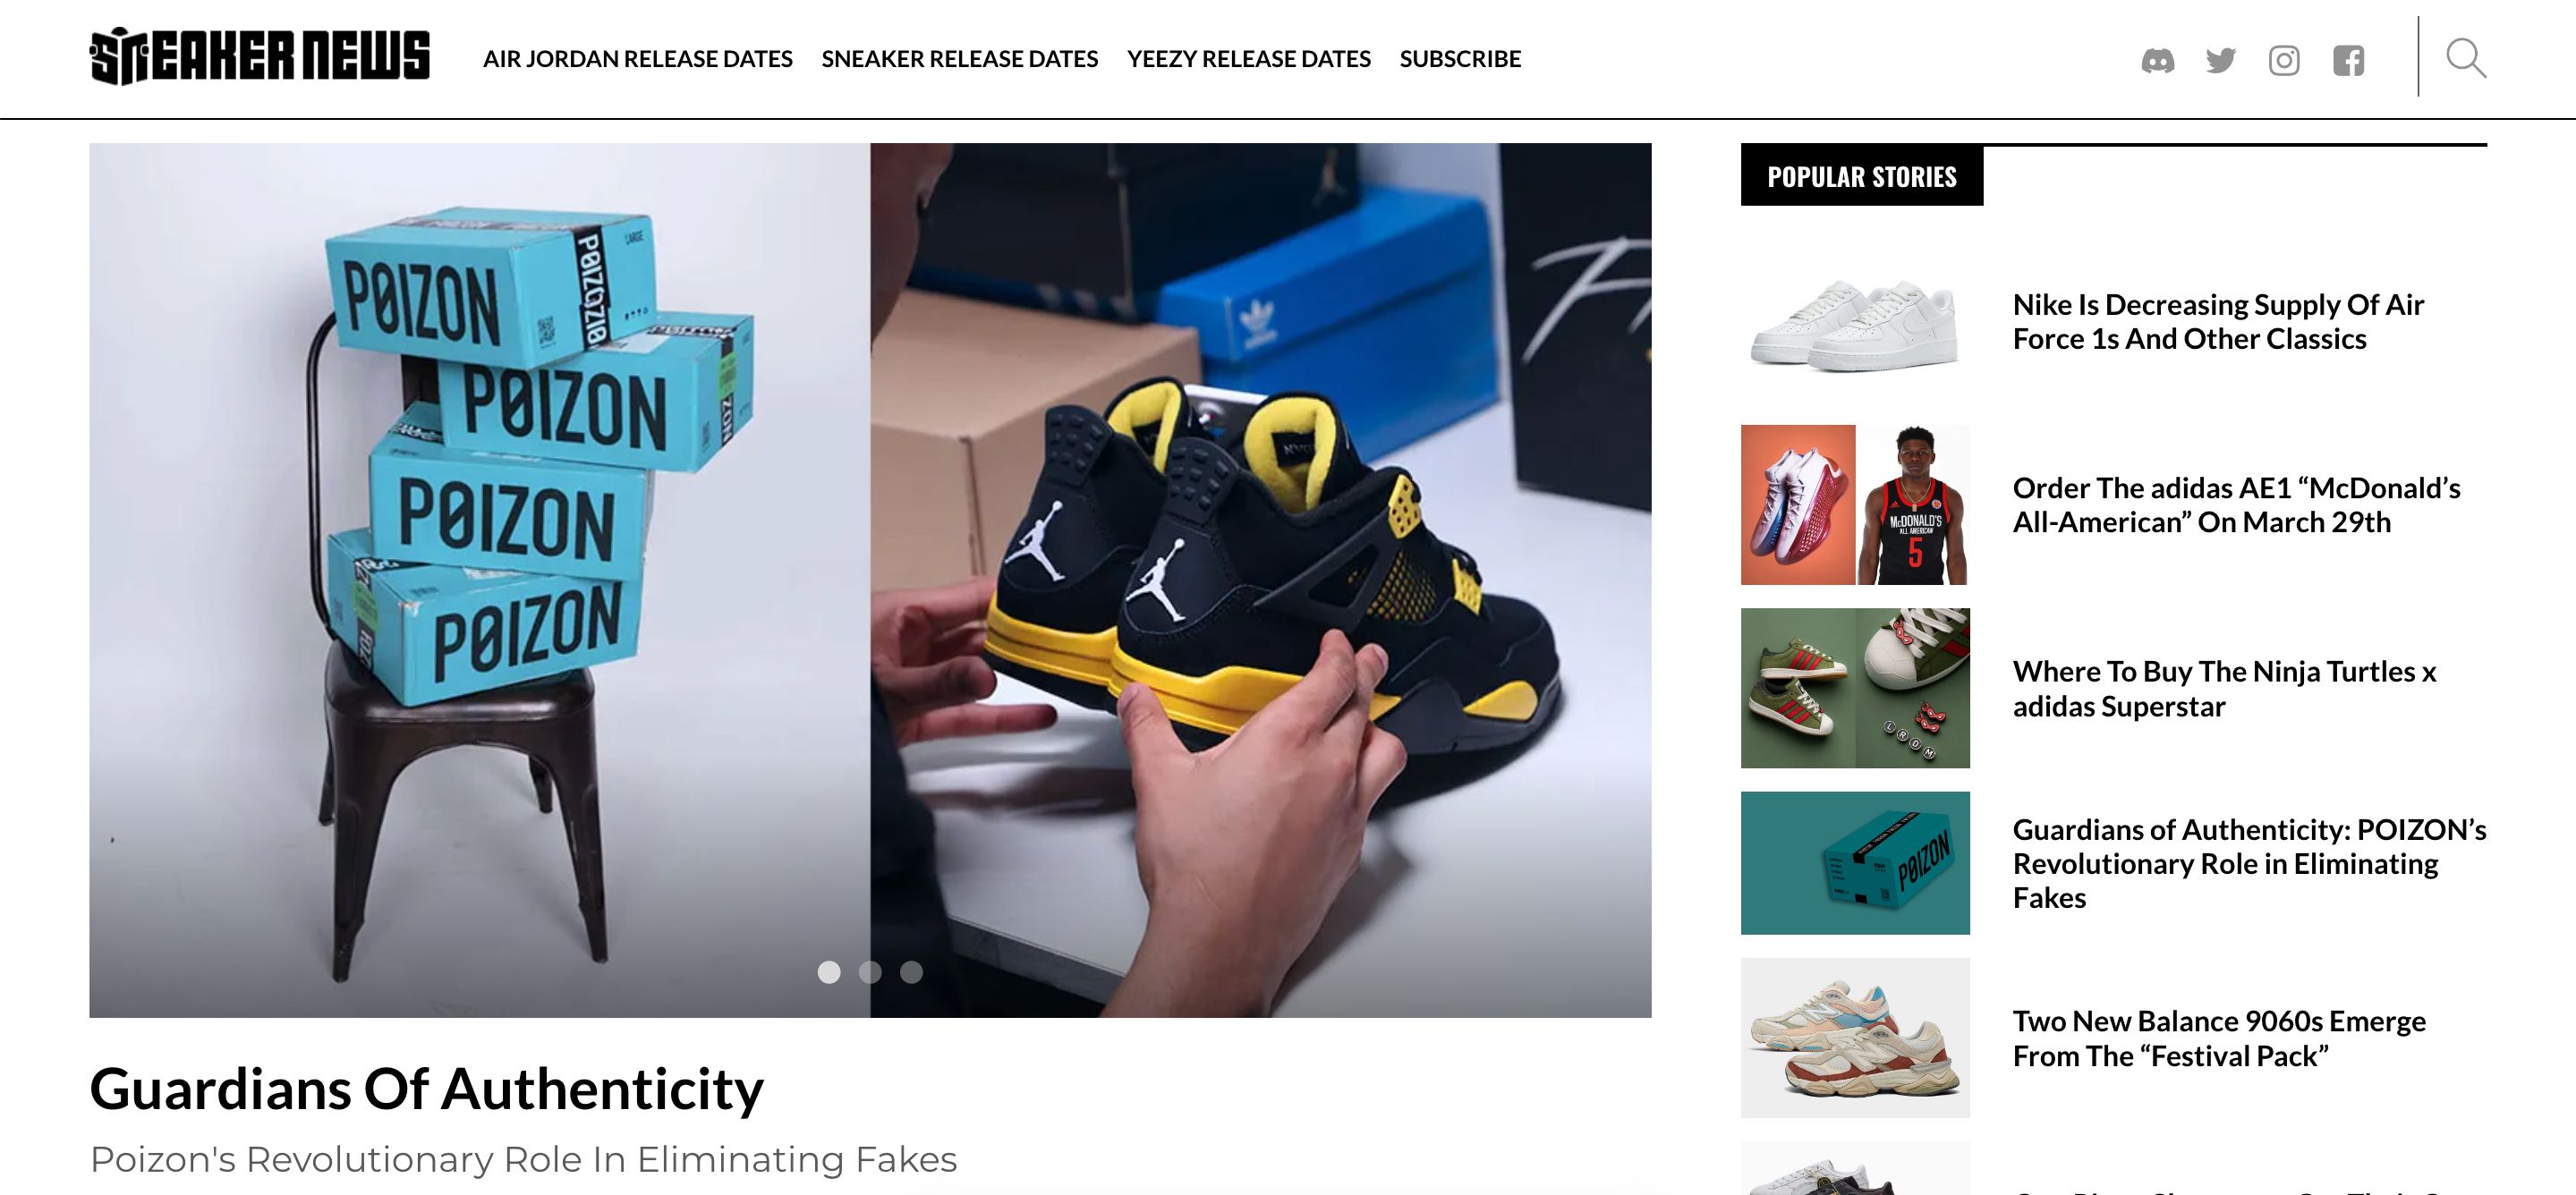 The Sneaker News Website 